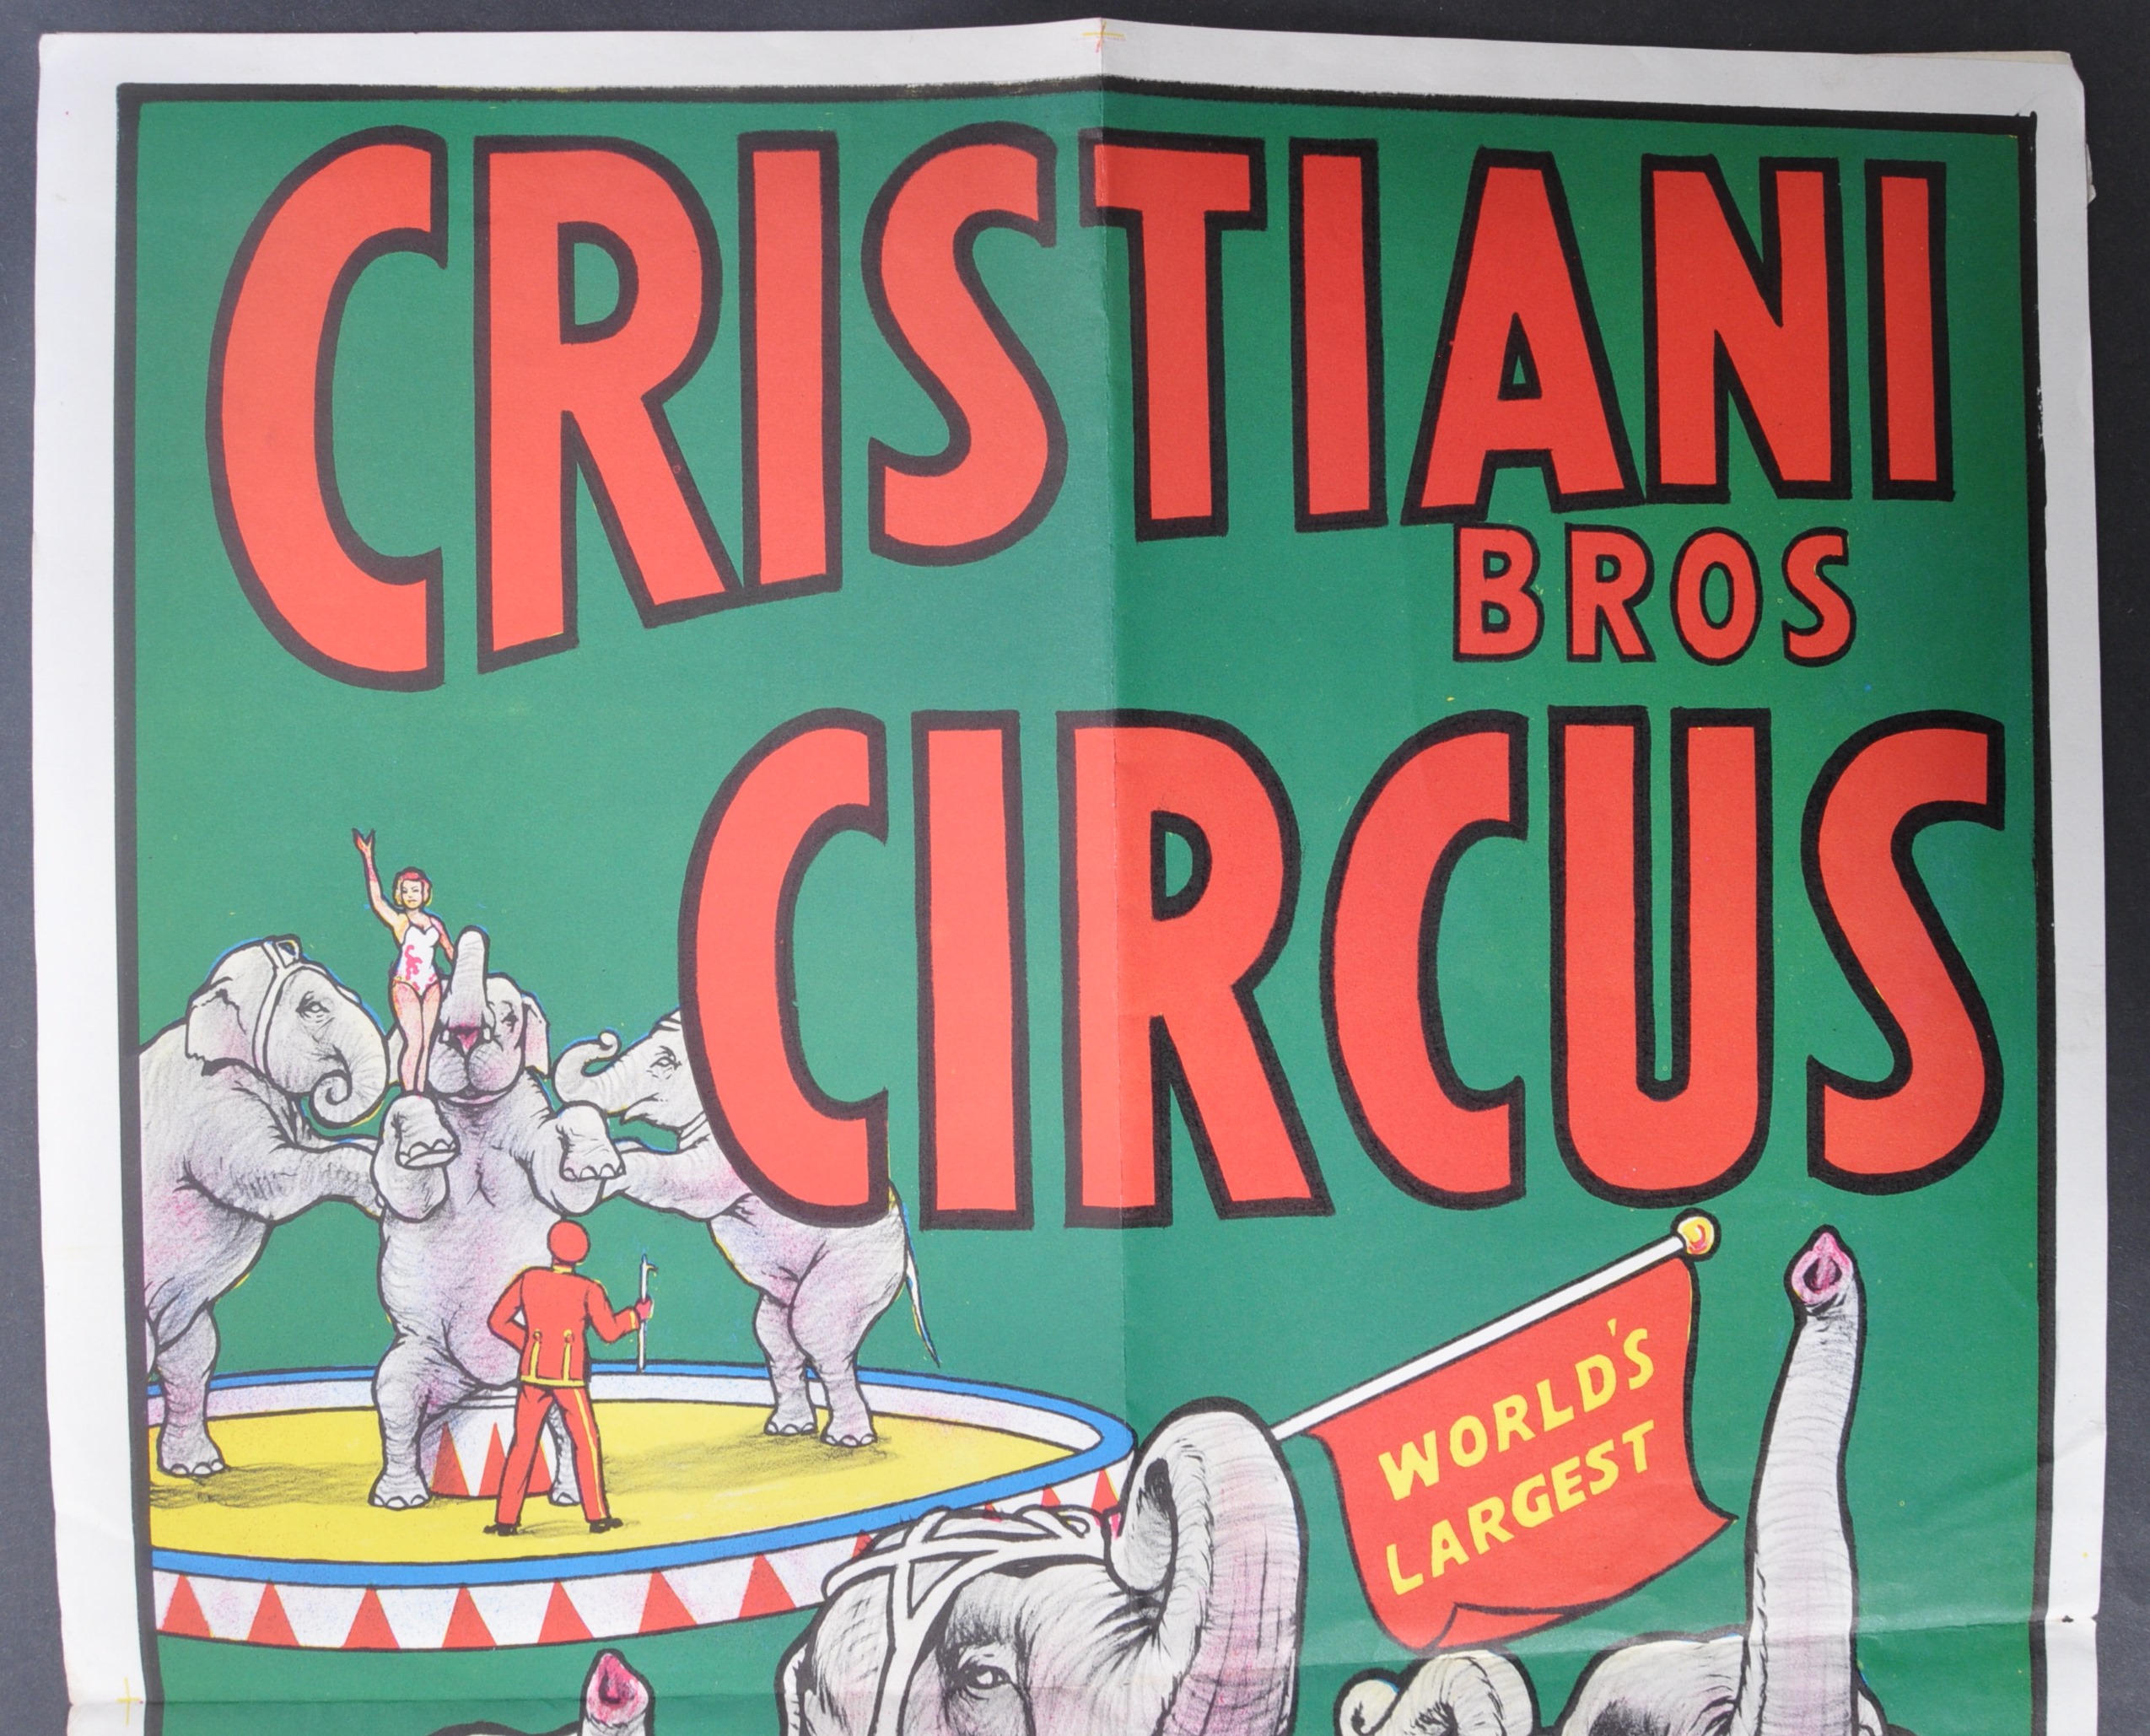 CRISTIANI BROS CIRCUS - ORIGINAL 1950S AMERICAN CIRCUS ADVERTISING POSTER - Image 2 of 4